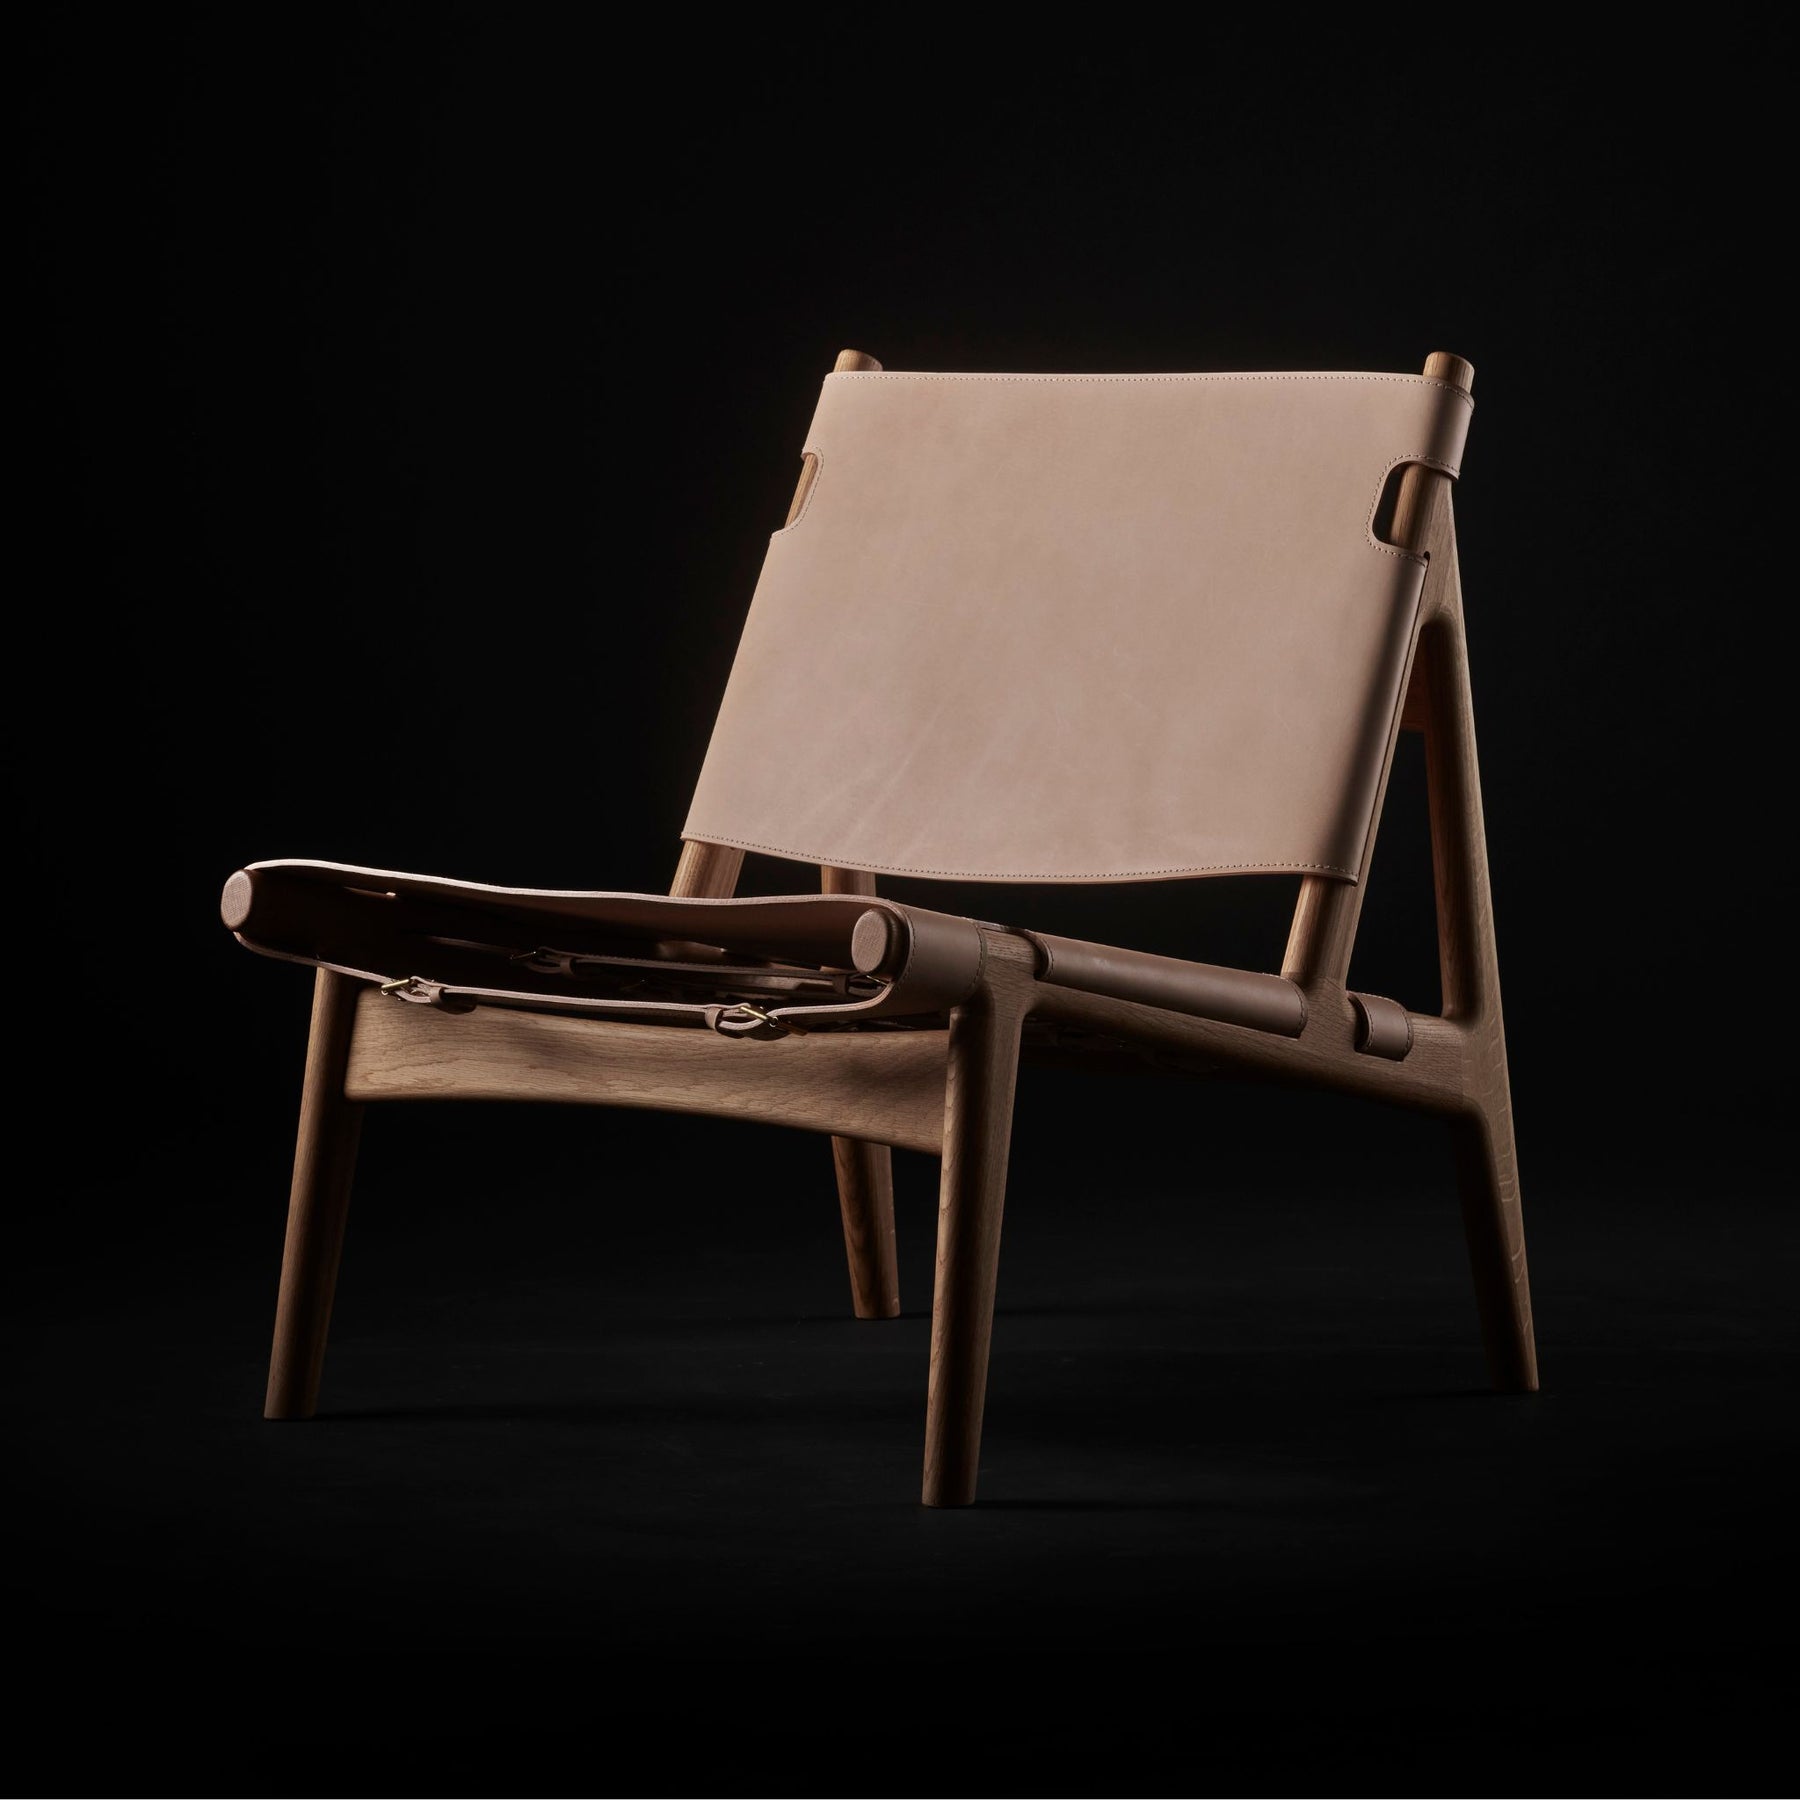 Eikund Hunter Chair Natural Saddle Leather with Oak Oil Frame in Studio Black Background